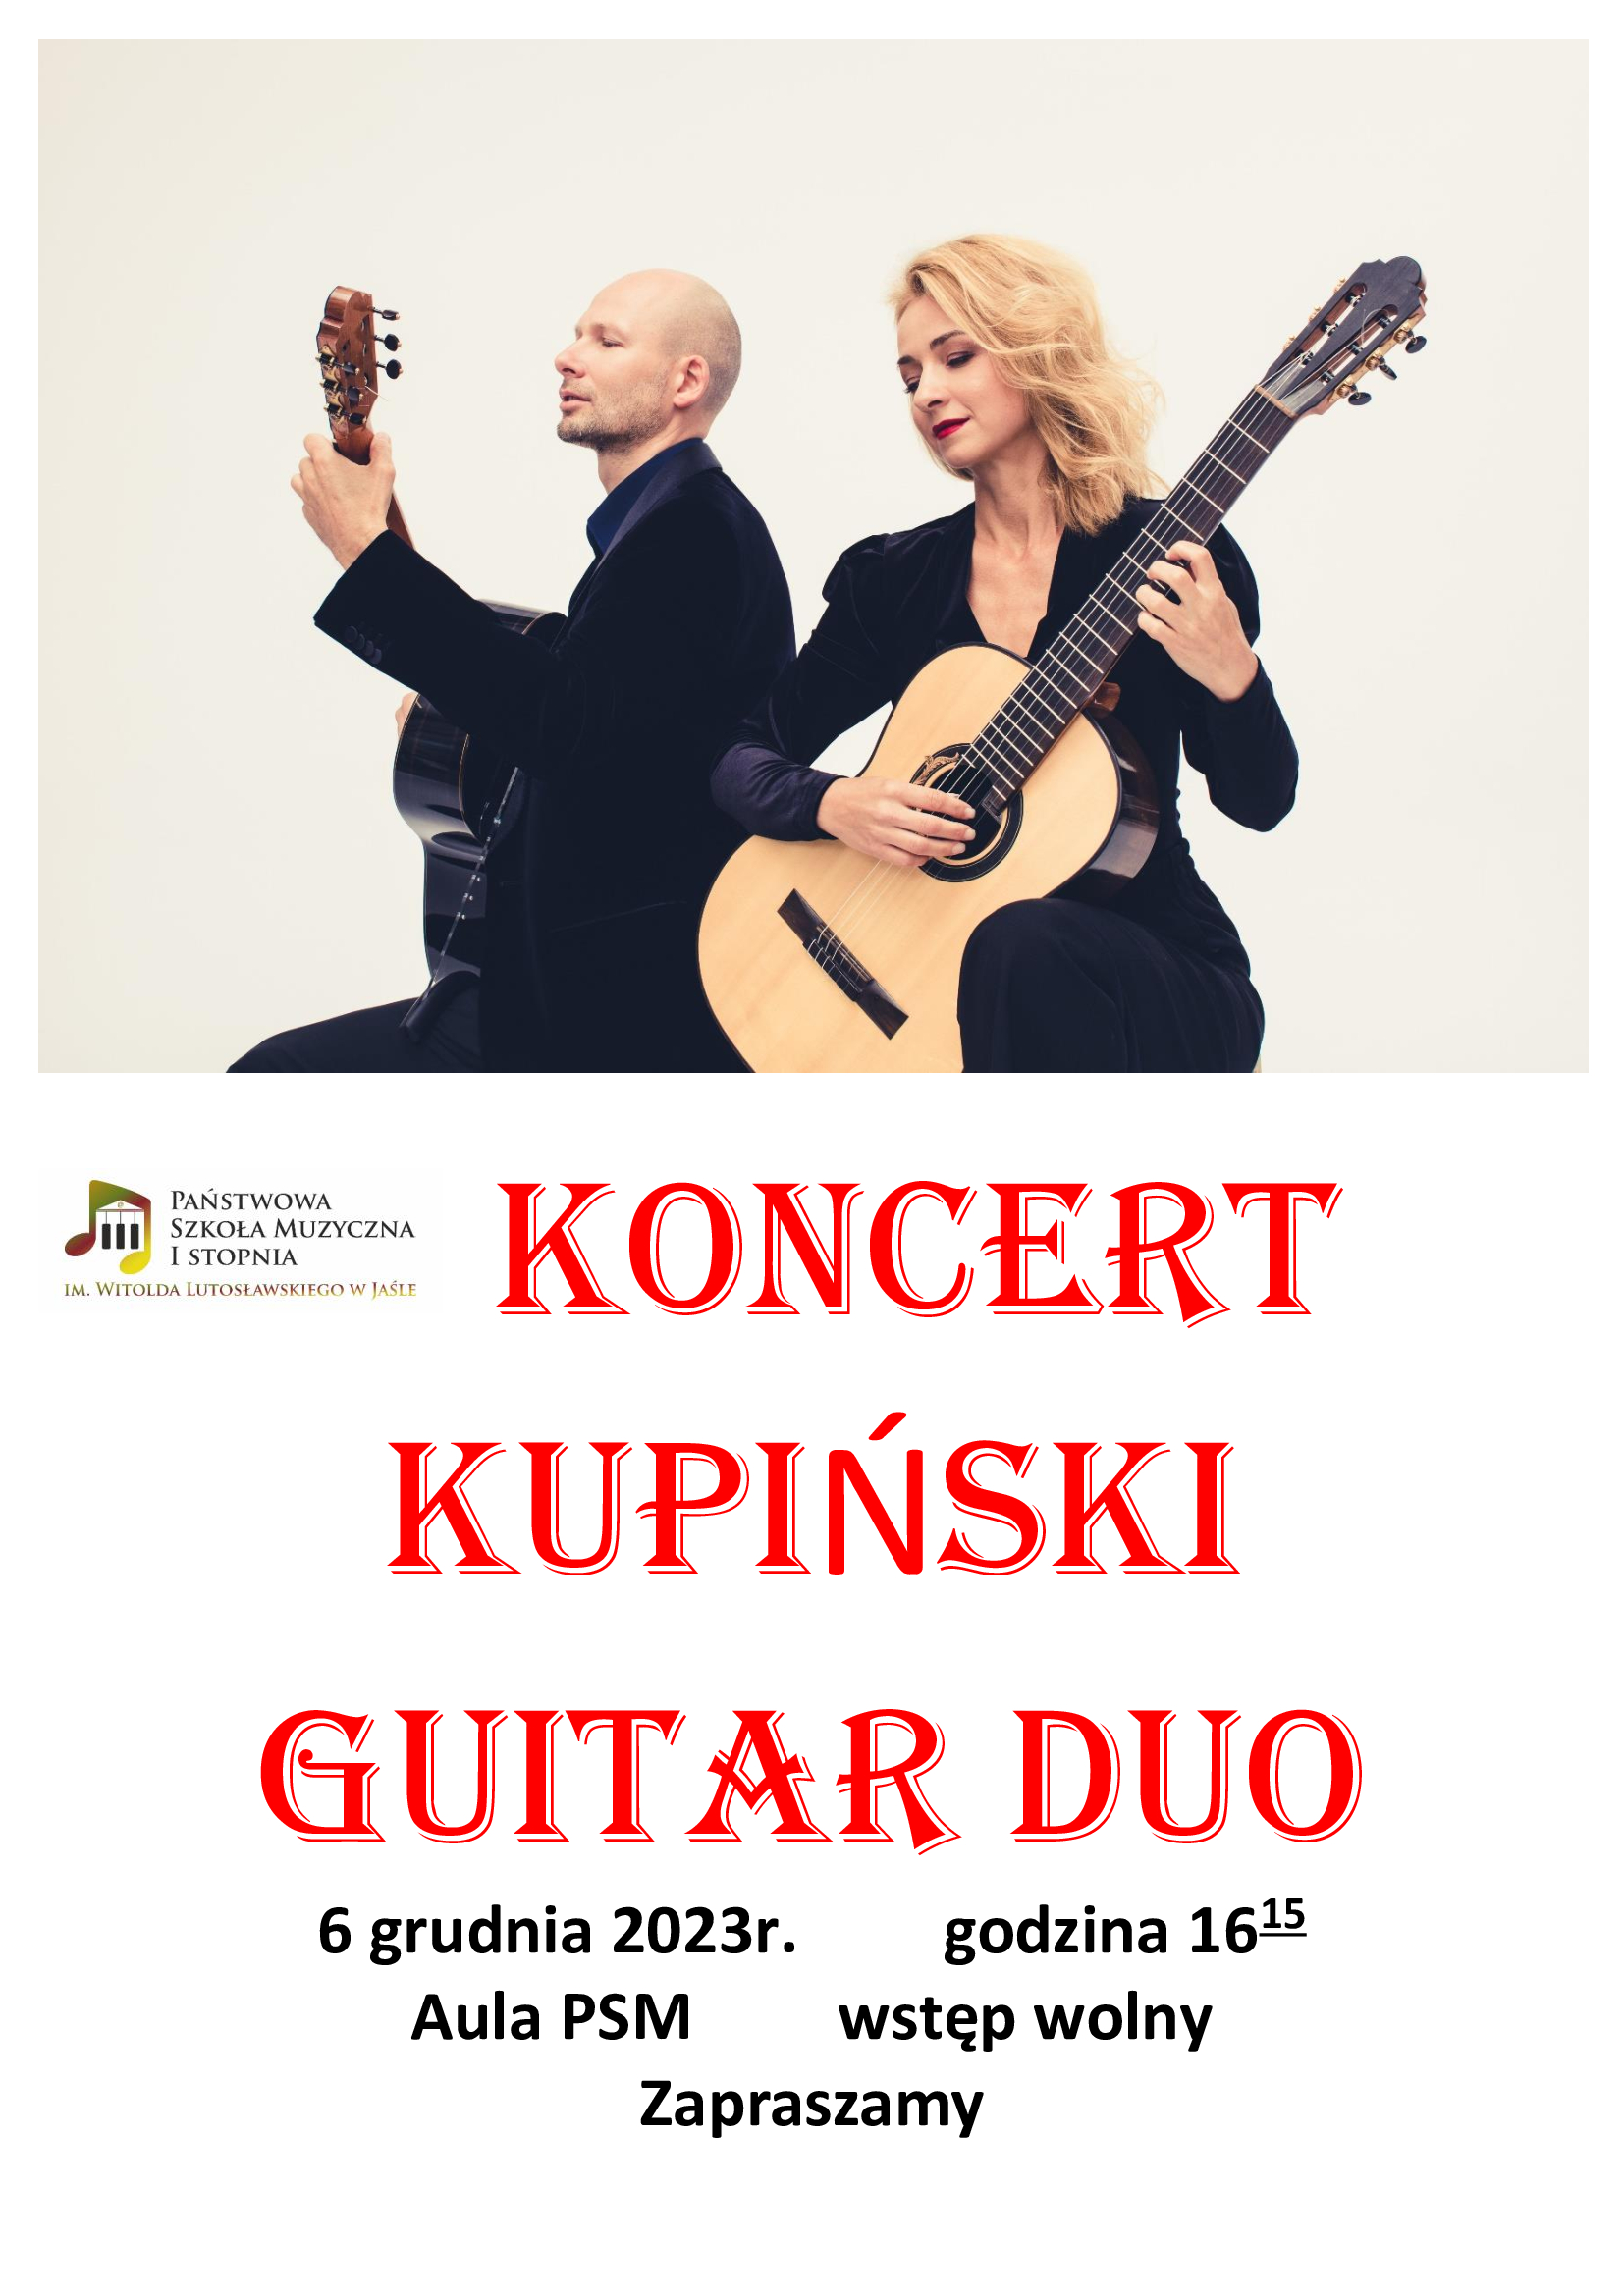 Koncert Kupiński Guitar Duo